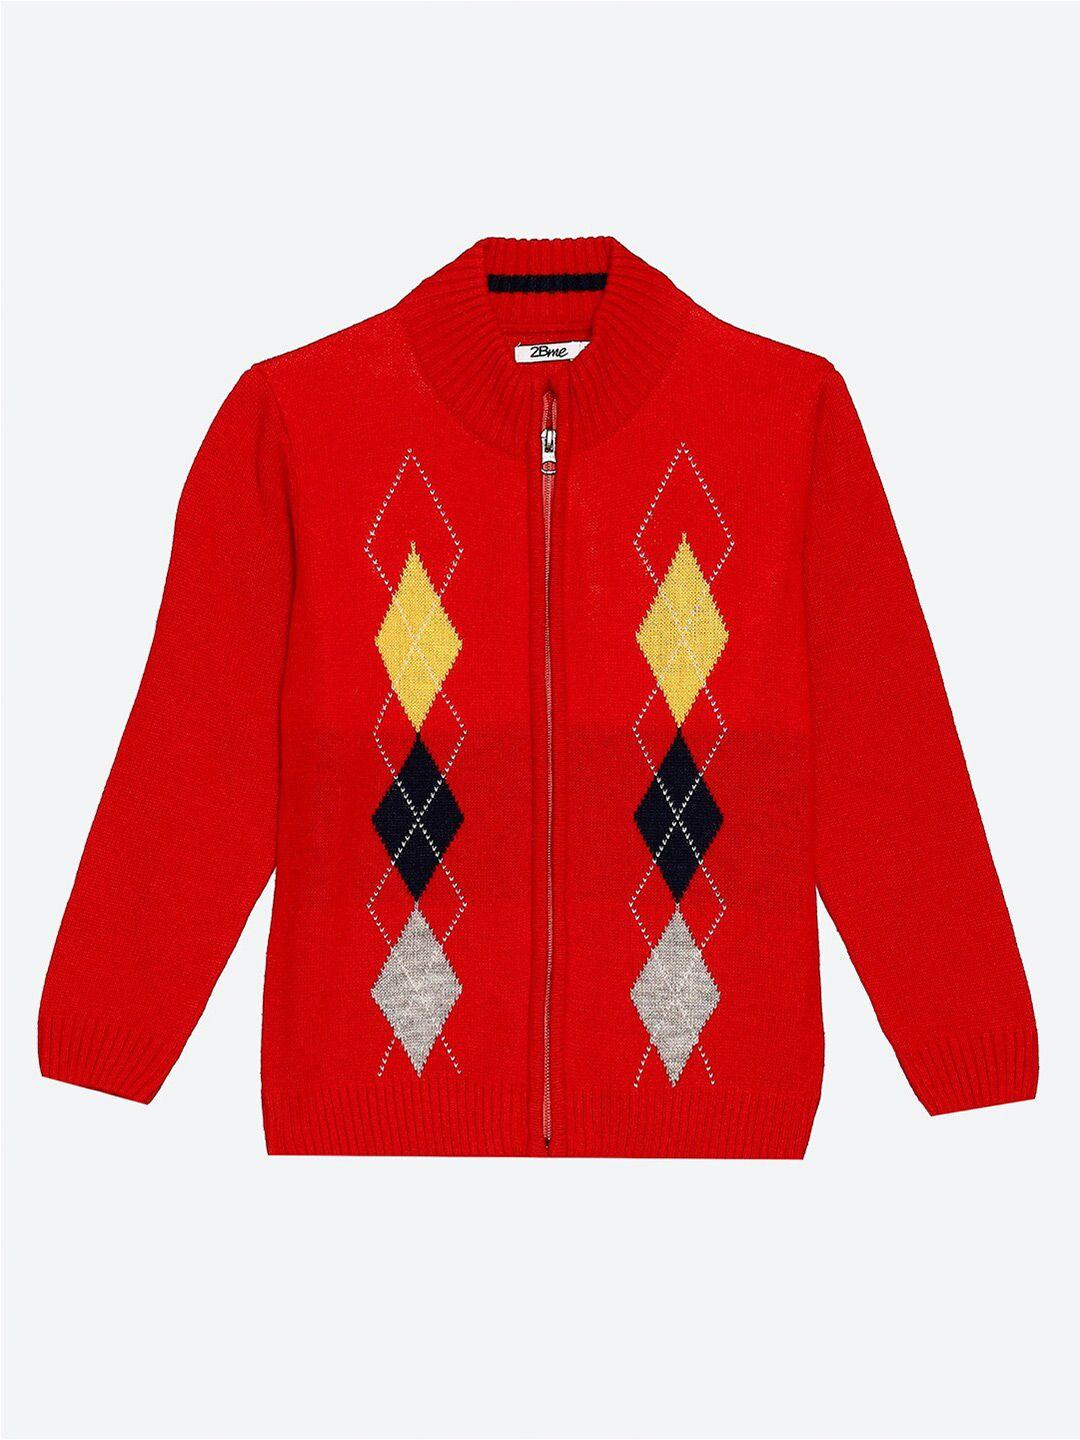 2bme-boys-geometric-printed-acrylic-cardigan-sweater